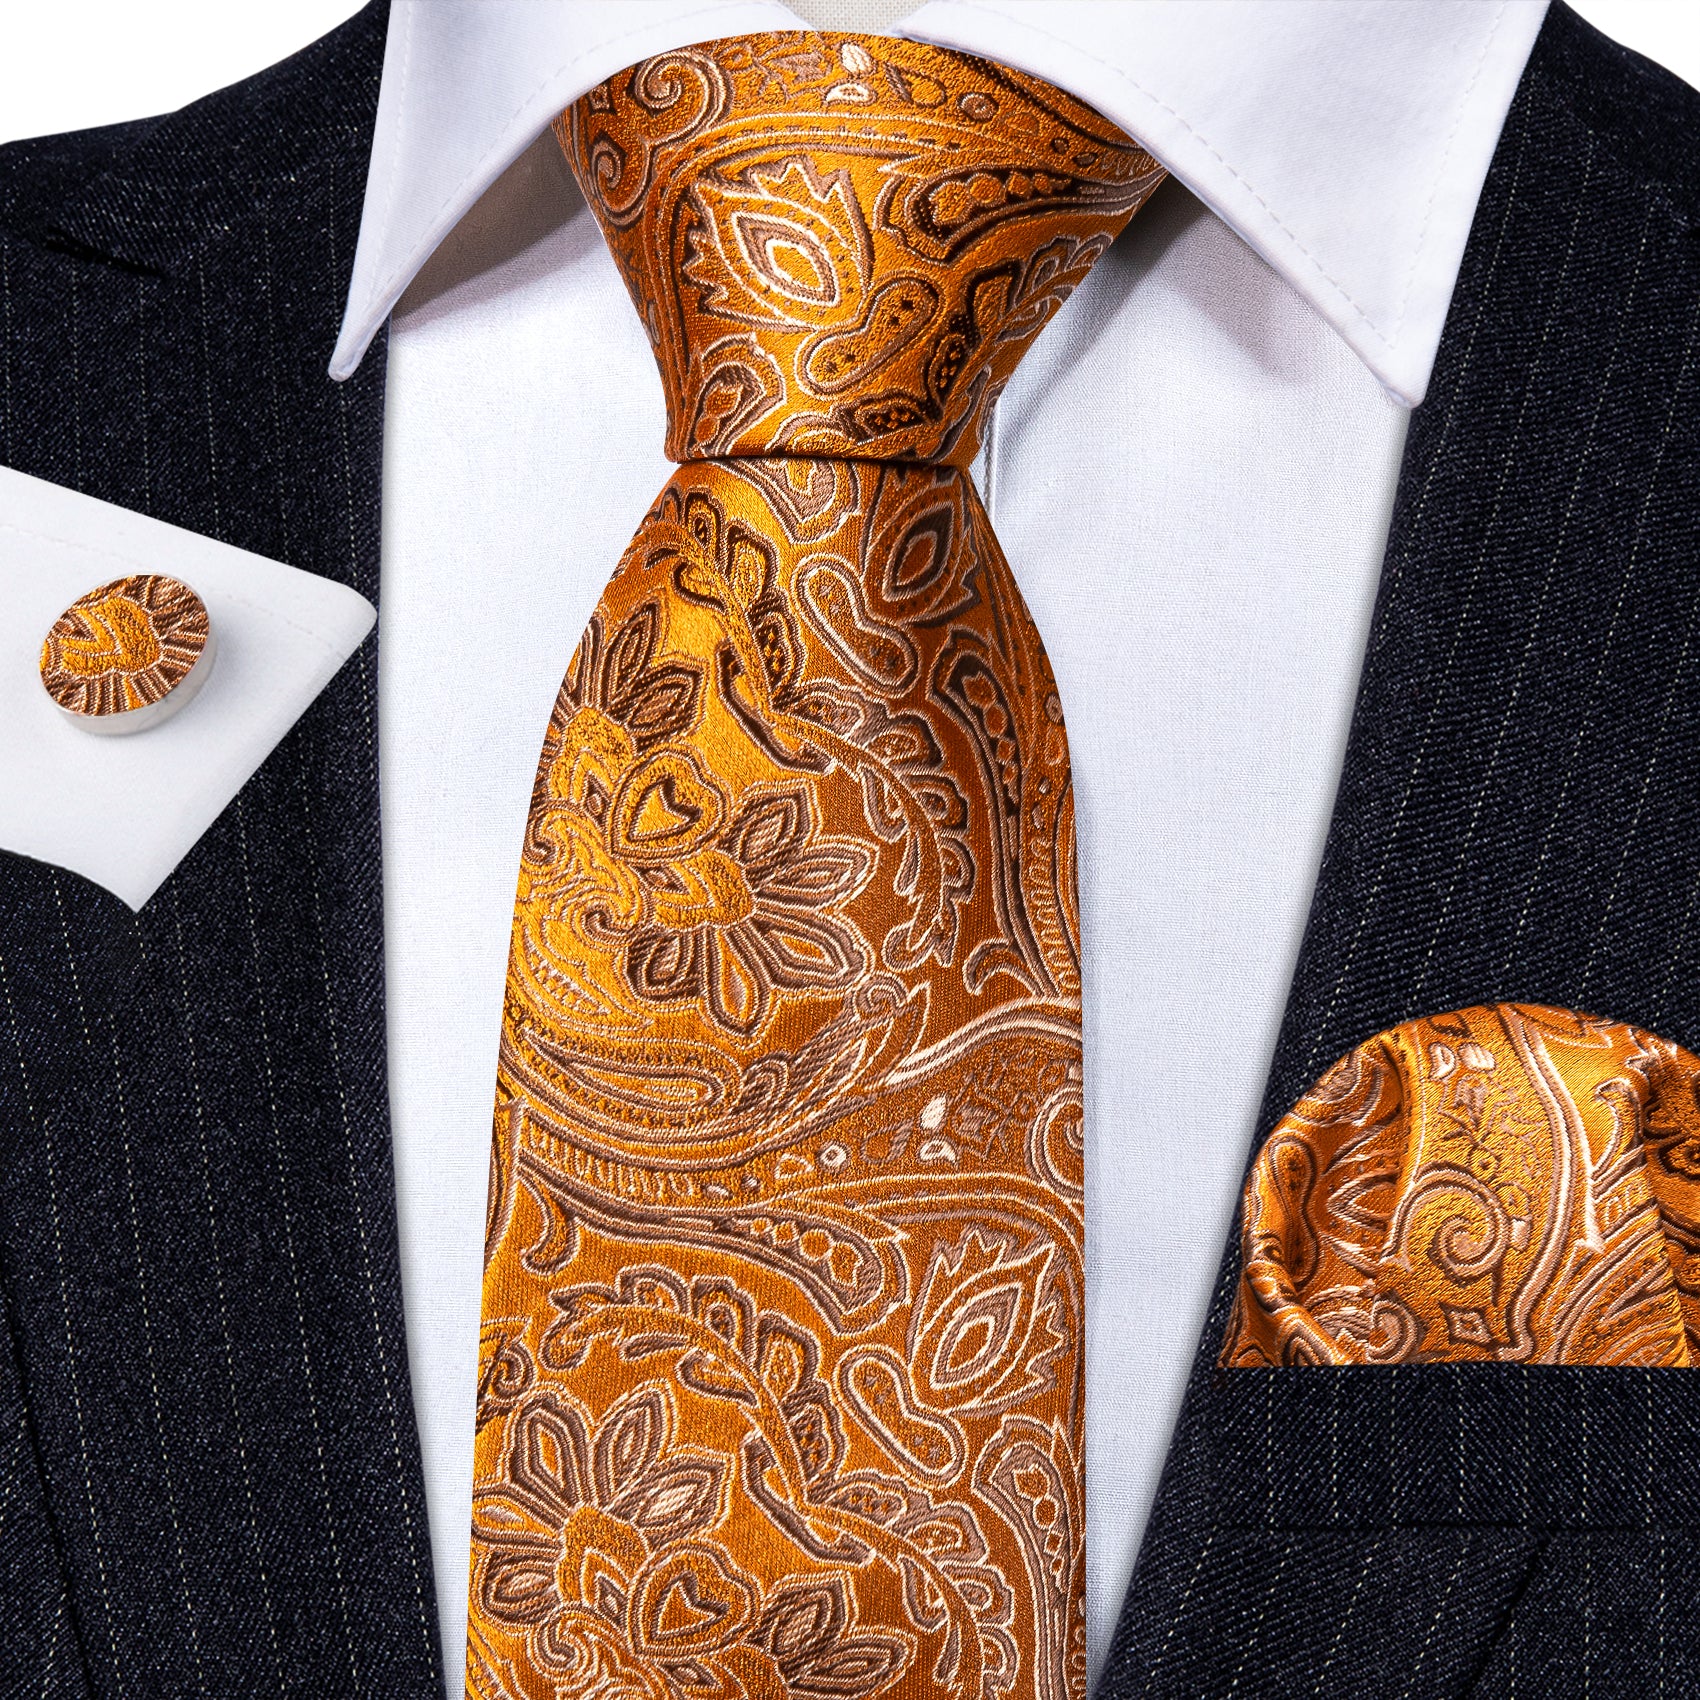 Orange Silver Paisley Silk Tie Handkerchief Cufflinks Set